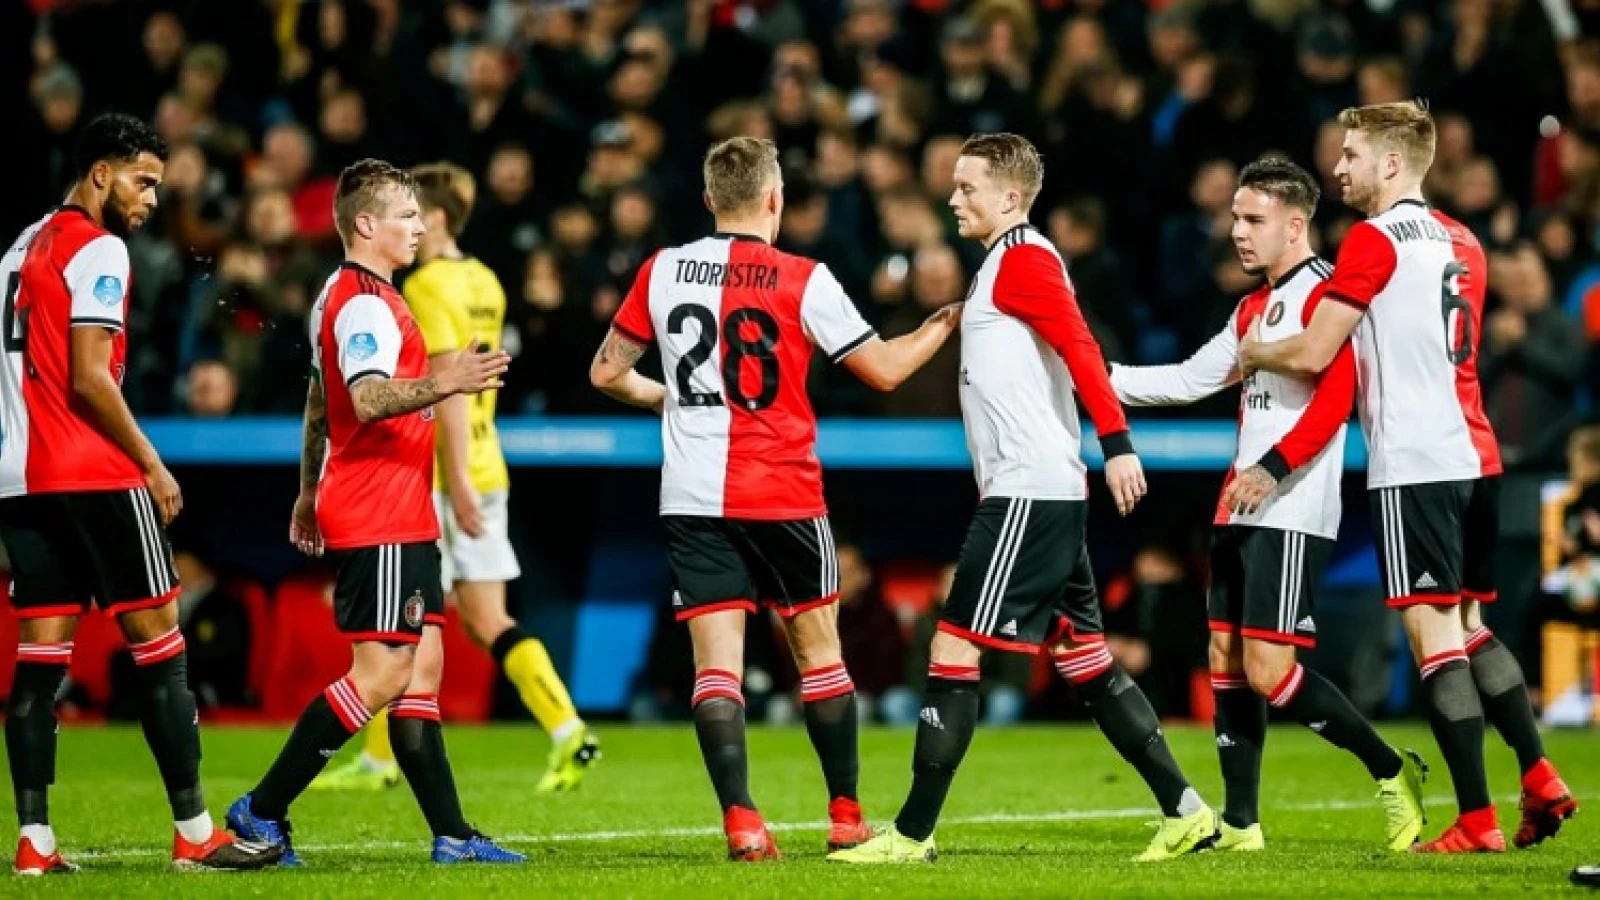 LIVE | Feyenoord - Fortuna 0-2 | Einde wedstrijd